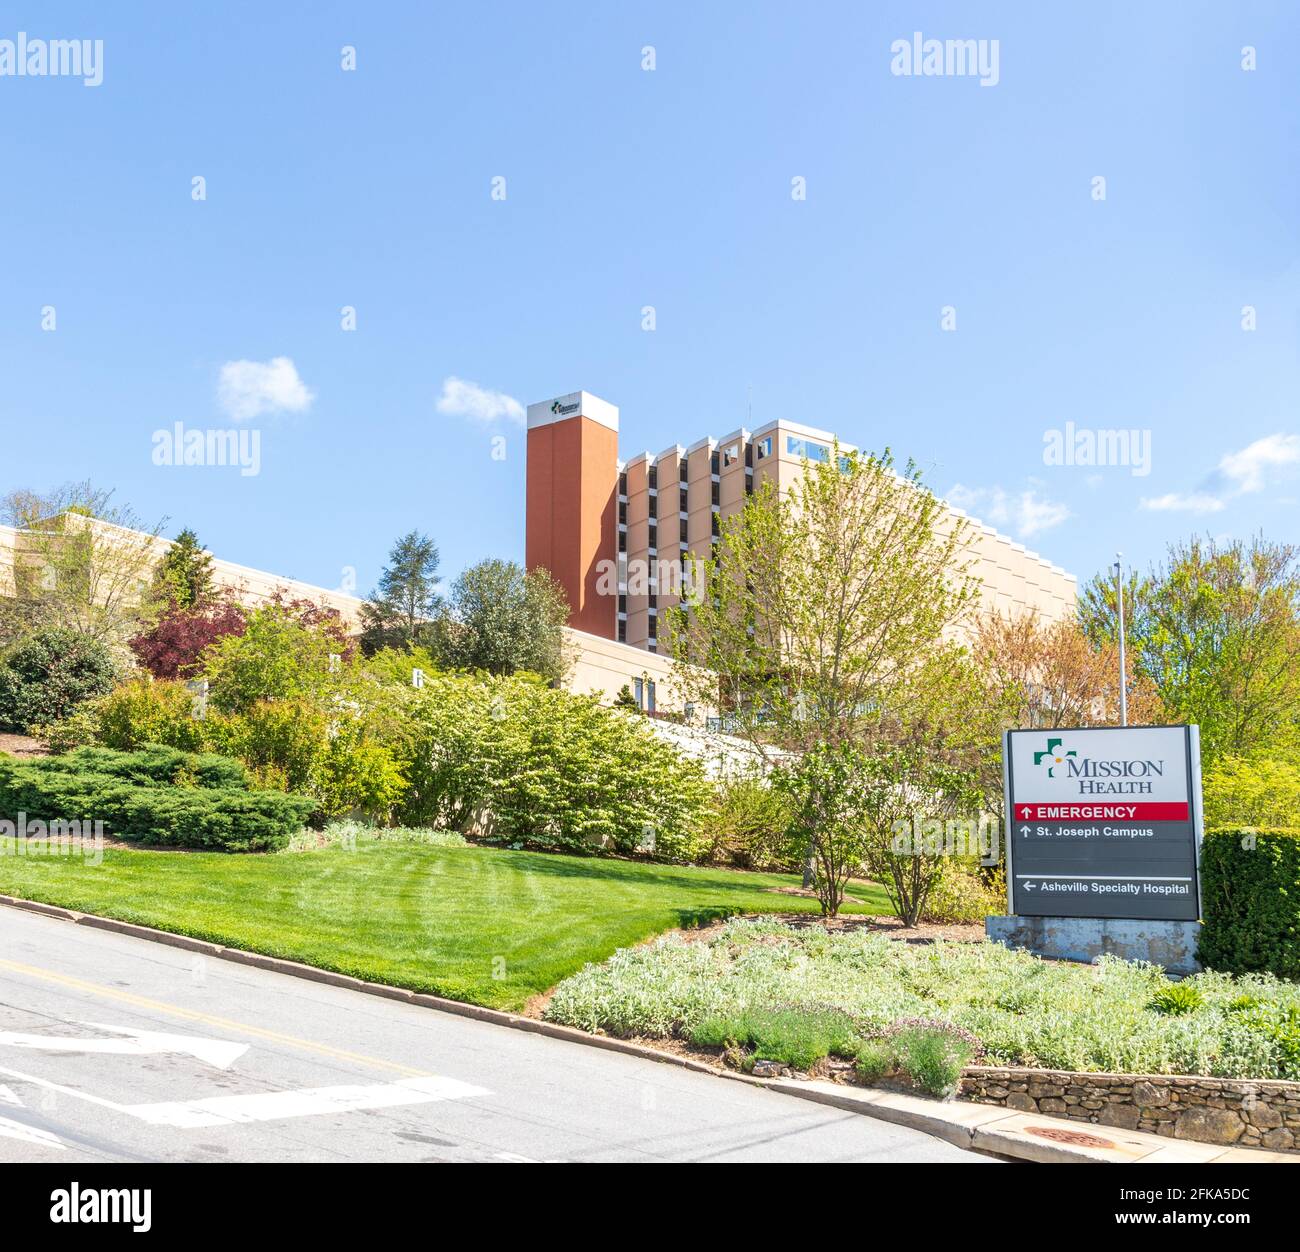 ASHEVILLE, NC, USA-25 APRIL 2021: Mission Health Emergency Entrance, St. Joseph Campus, Asheville Specialty Hospital. Informationsschild und Gebäude. Stockfoto